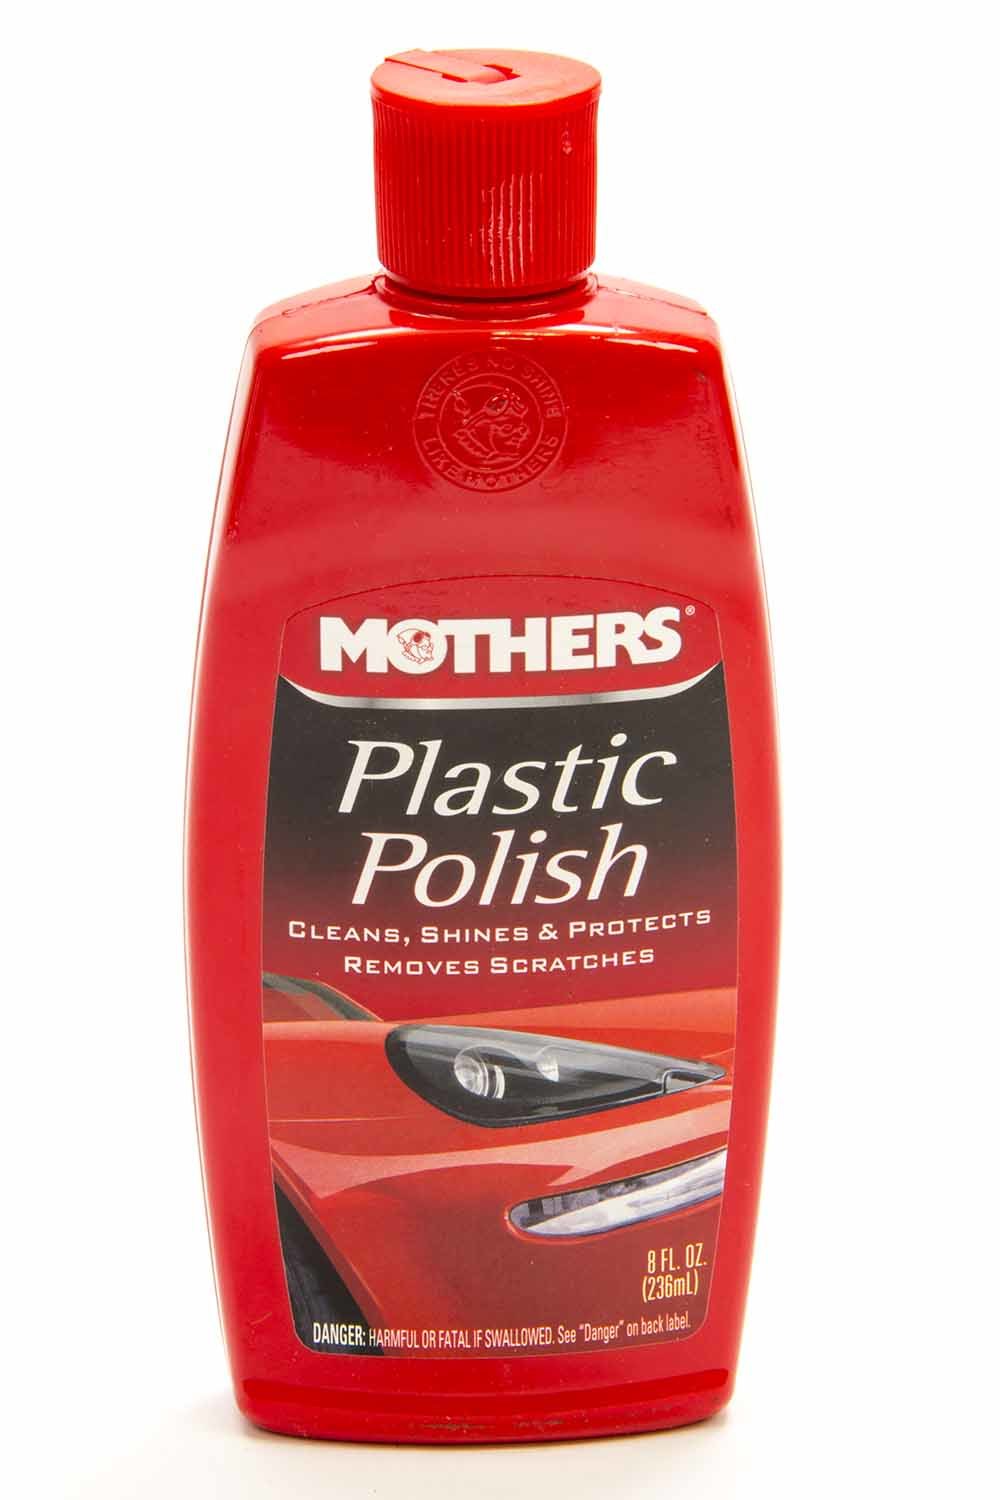 MOTHERS Plastic Polish, 8 oz, Each